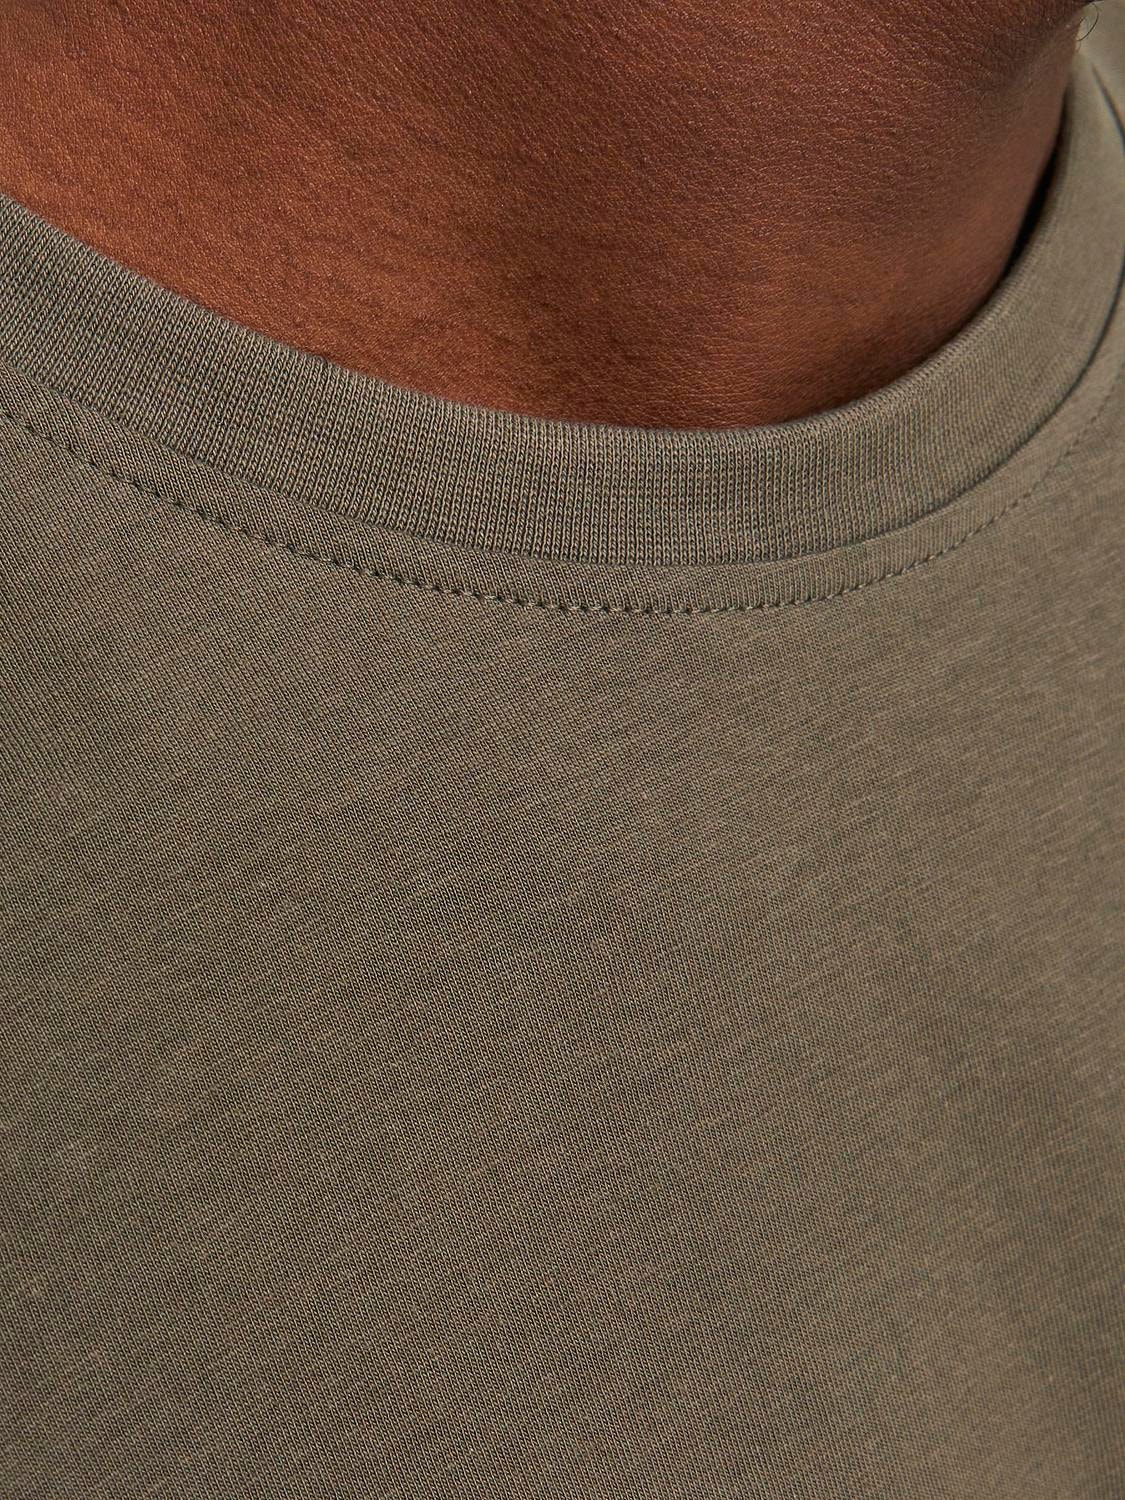 Jack & Jones Plain O-Neck T-shirt -Bungee Cord - 12113648